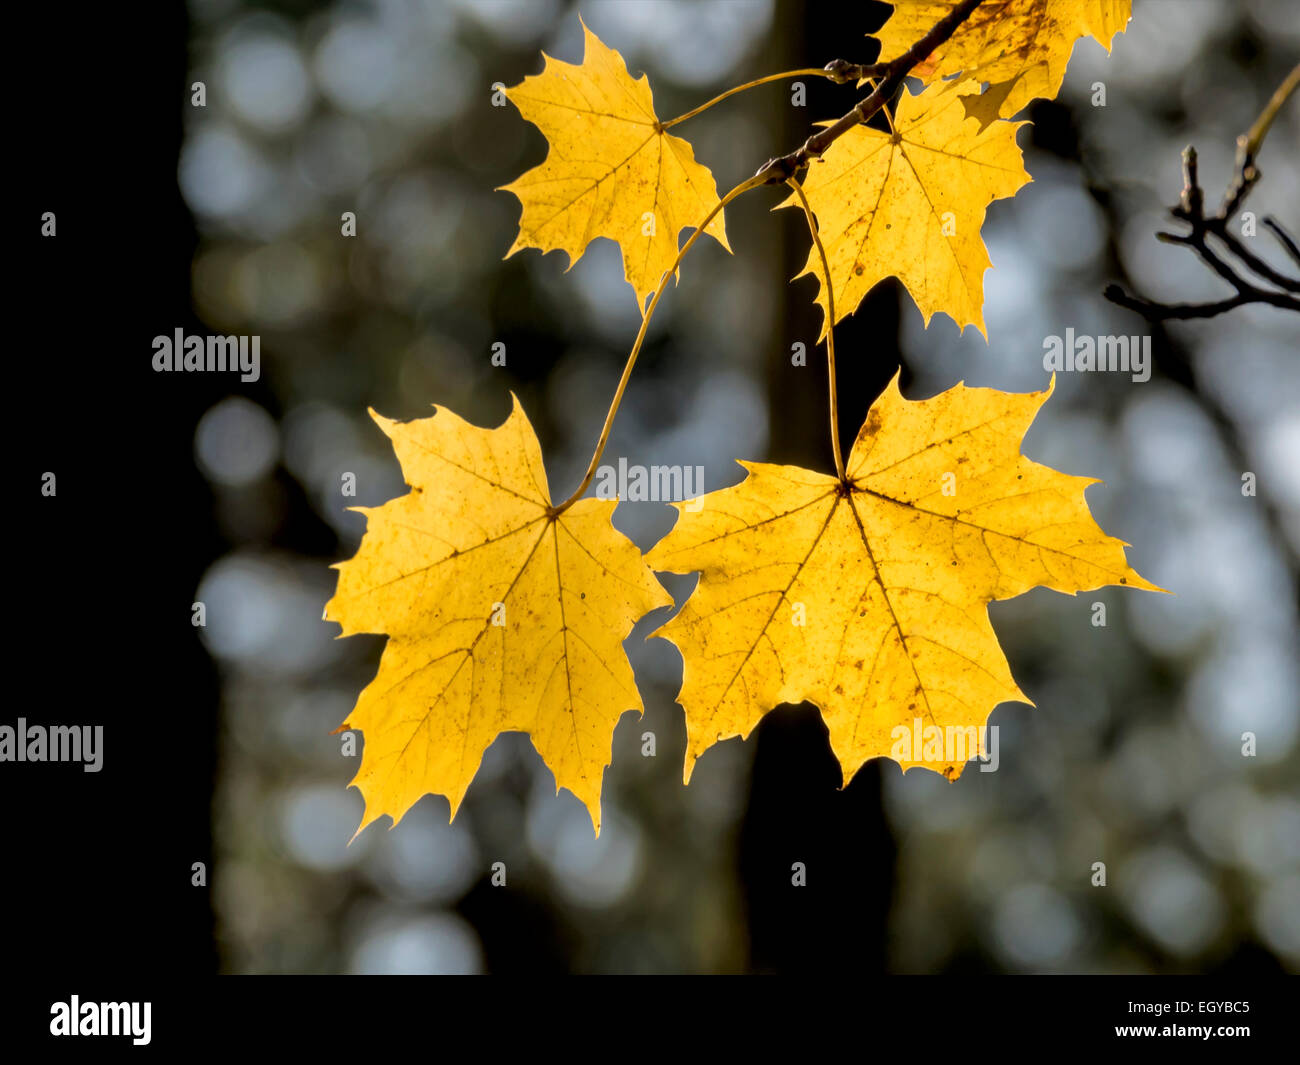 Yellow autumn leaves of maple tree Stock Photo